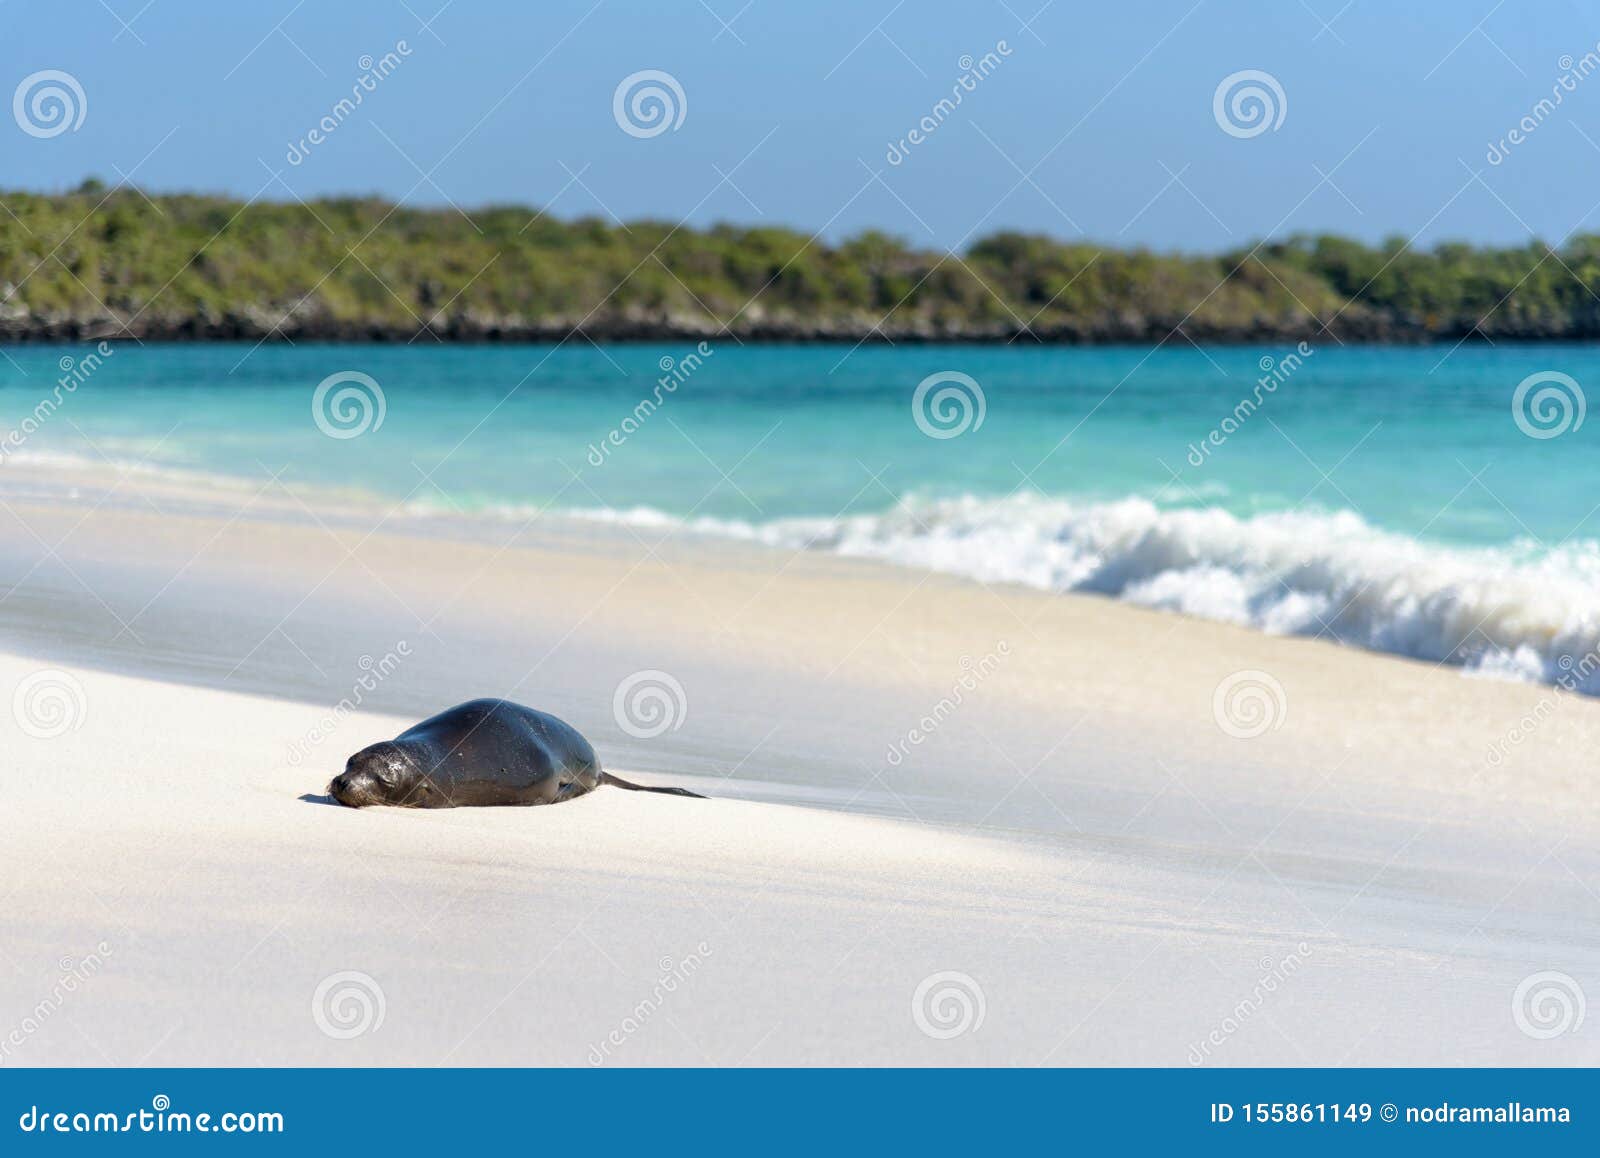 sea lion zalophus wollebaeki on beach on gardner bay, espanola, galapagos island, ecuador, south america